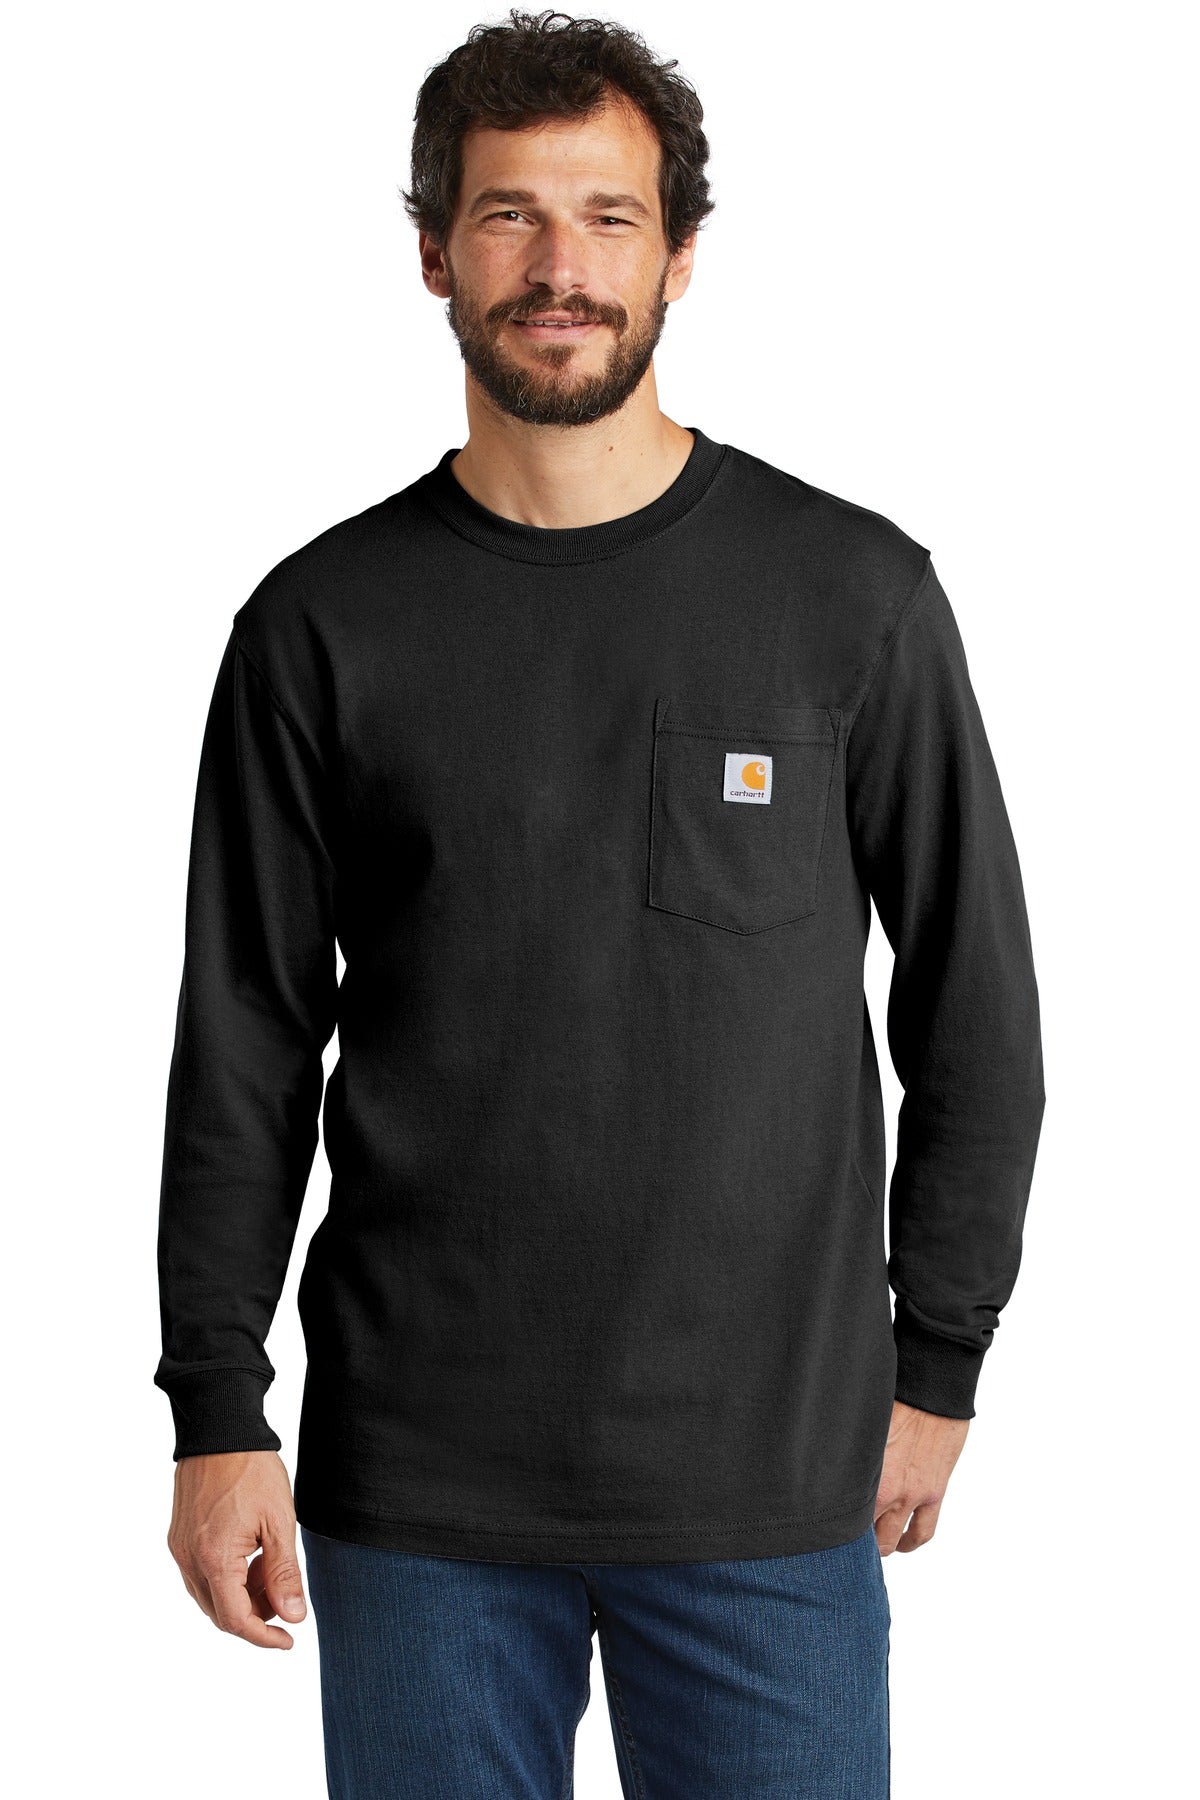 Swaasi Core - Carhartt® POCKET LONG-SLEEVE Workwear T-Shirt with EMB Logo